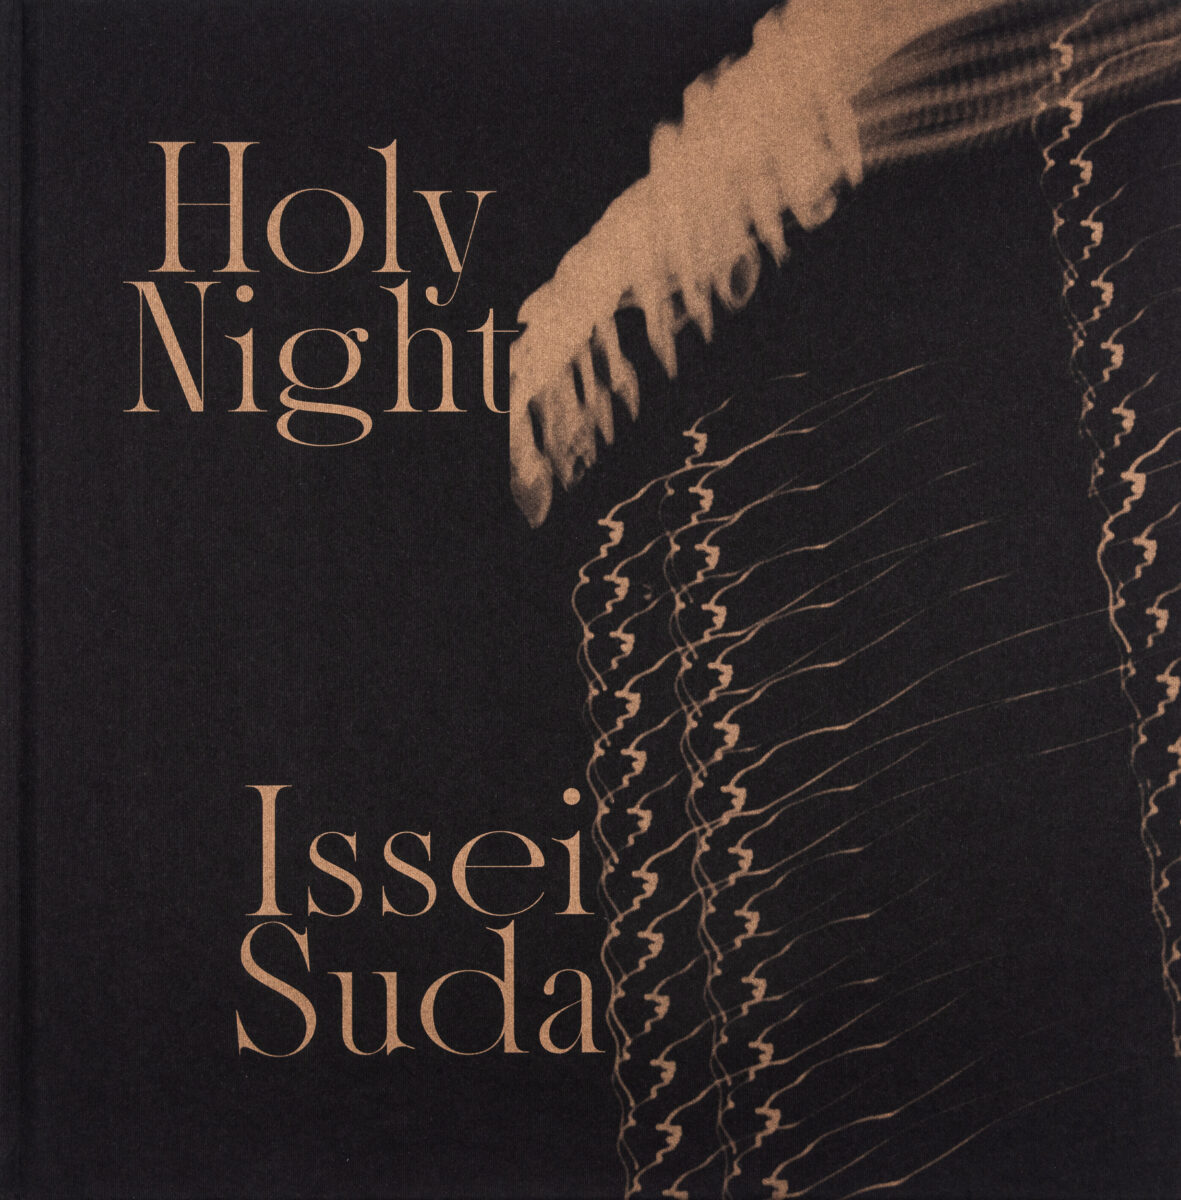 Issei Suda, Holy Night